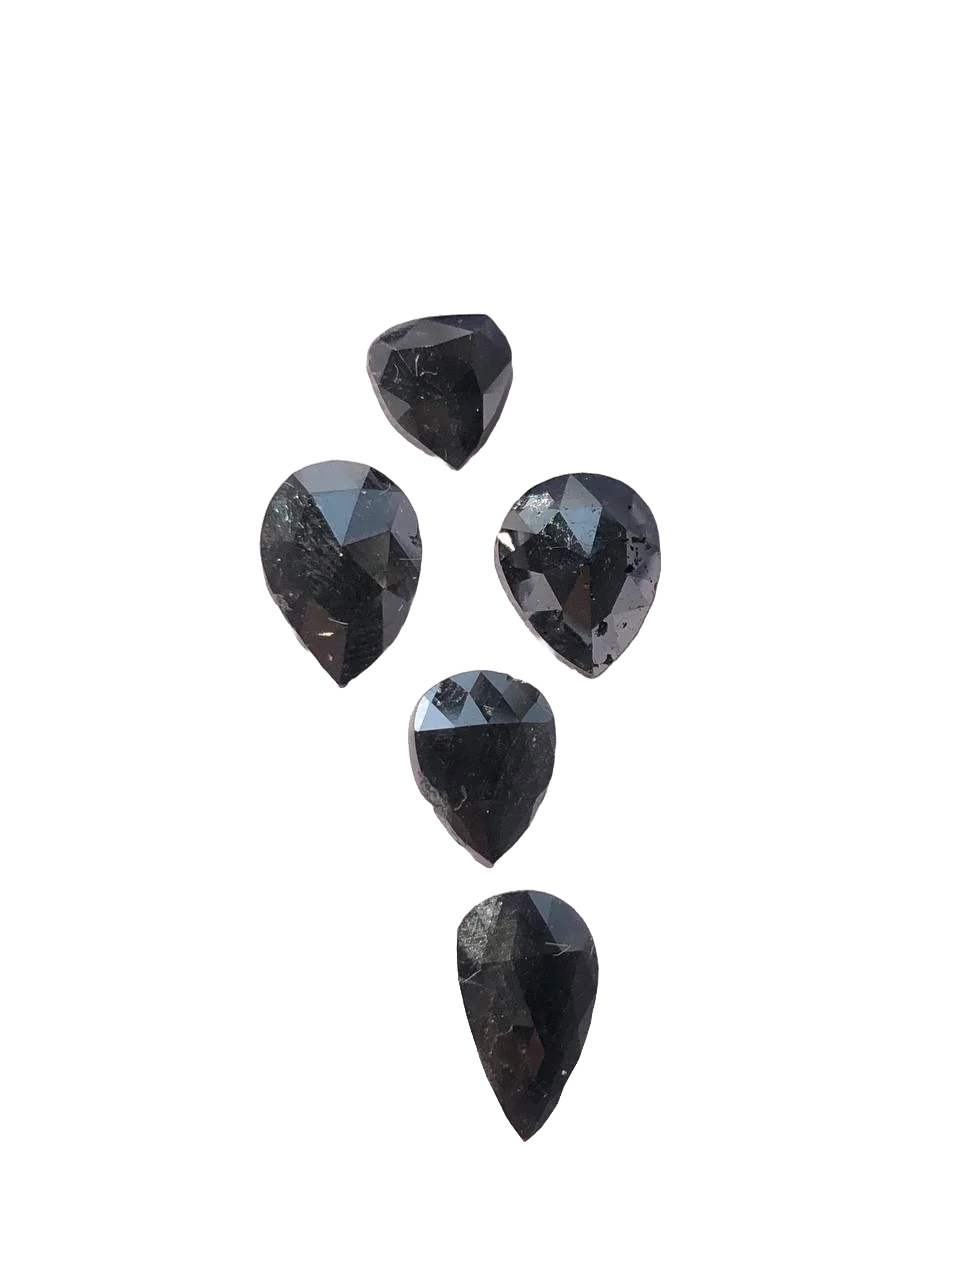 7.42 CT Natural Black Diamond Pear Cut Loose Diamond Jewelry Making Diamond